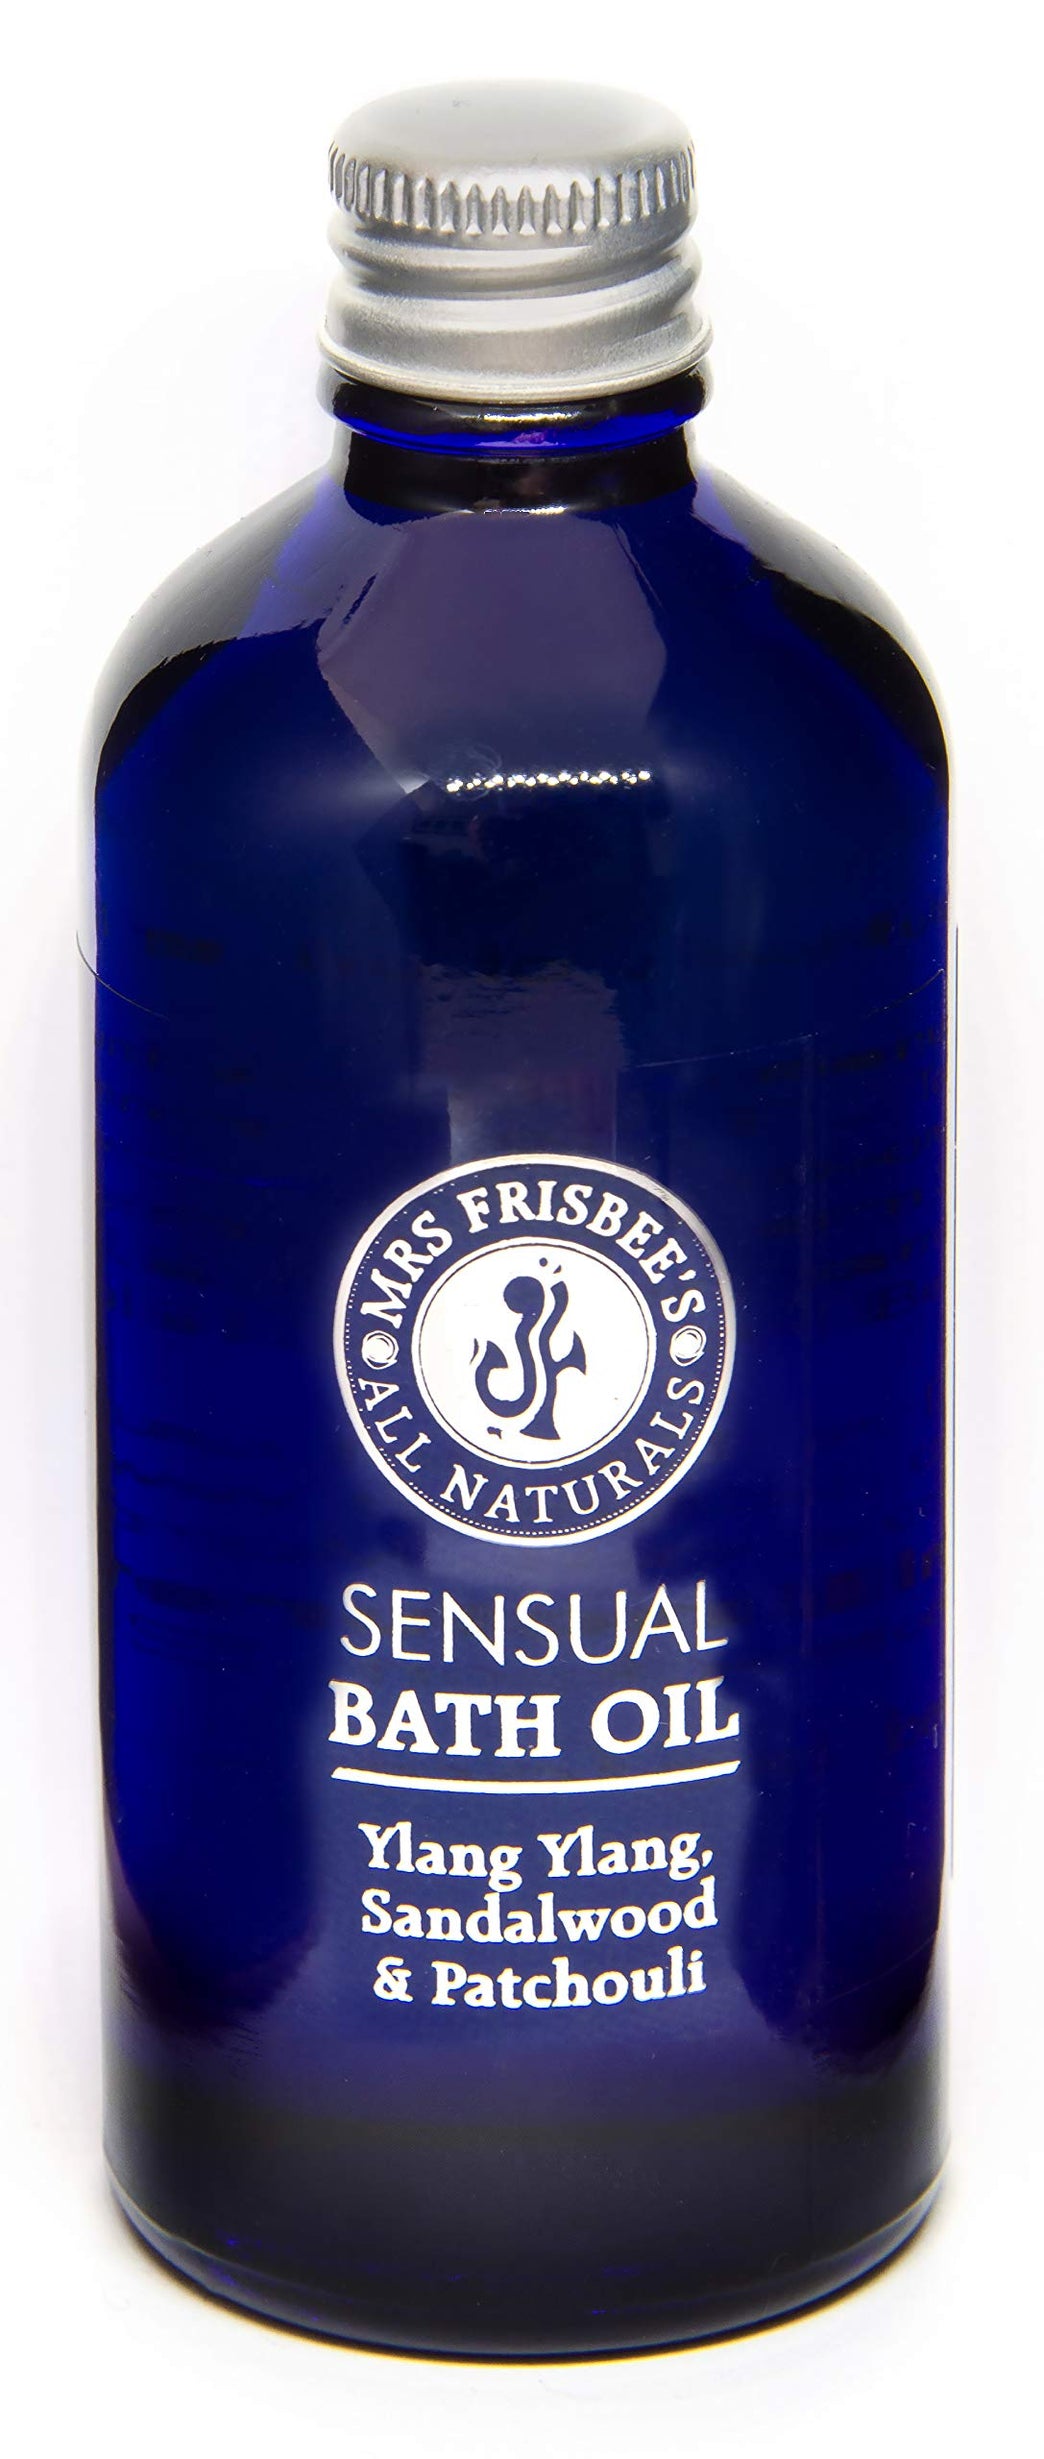 Sensual Aromatherapy Bath Oil with Sandalwood, Patchouli & Ylang Ylang - 100ml